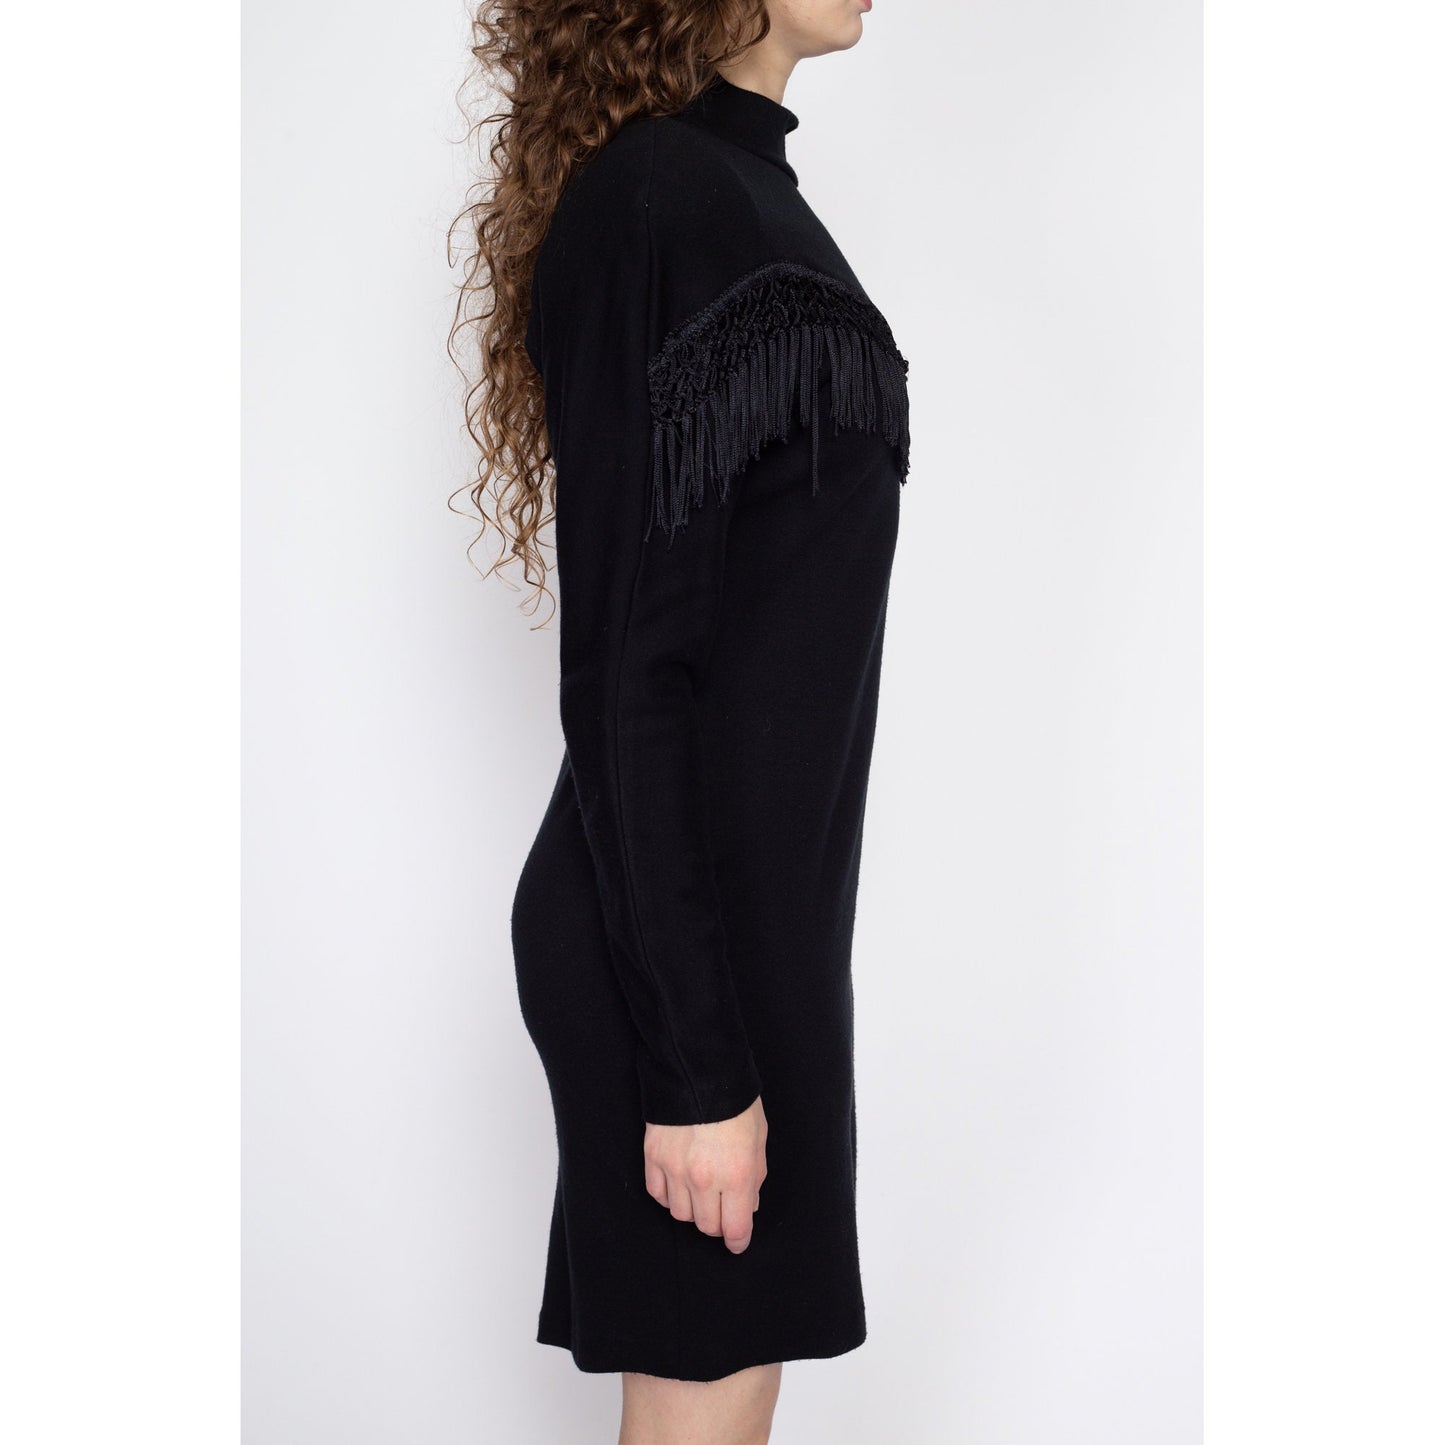 Medium 80s Black Fringe Trim Bodycon Mini Dress | Vintage Long Sleeve Mockneck Party Dress